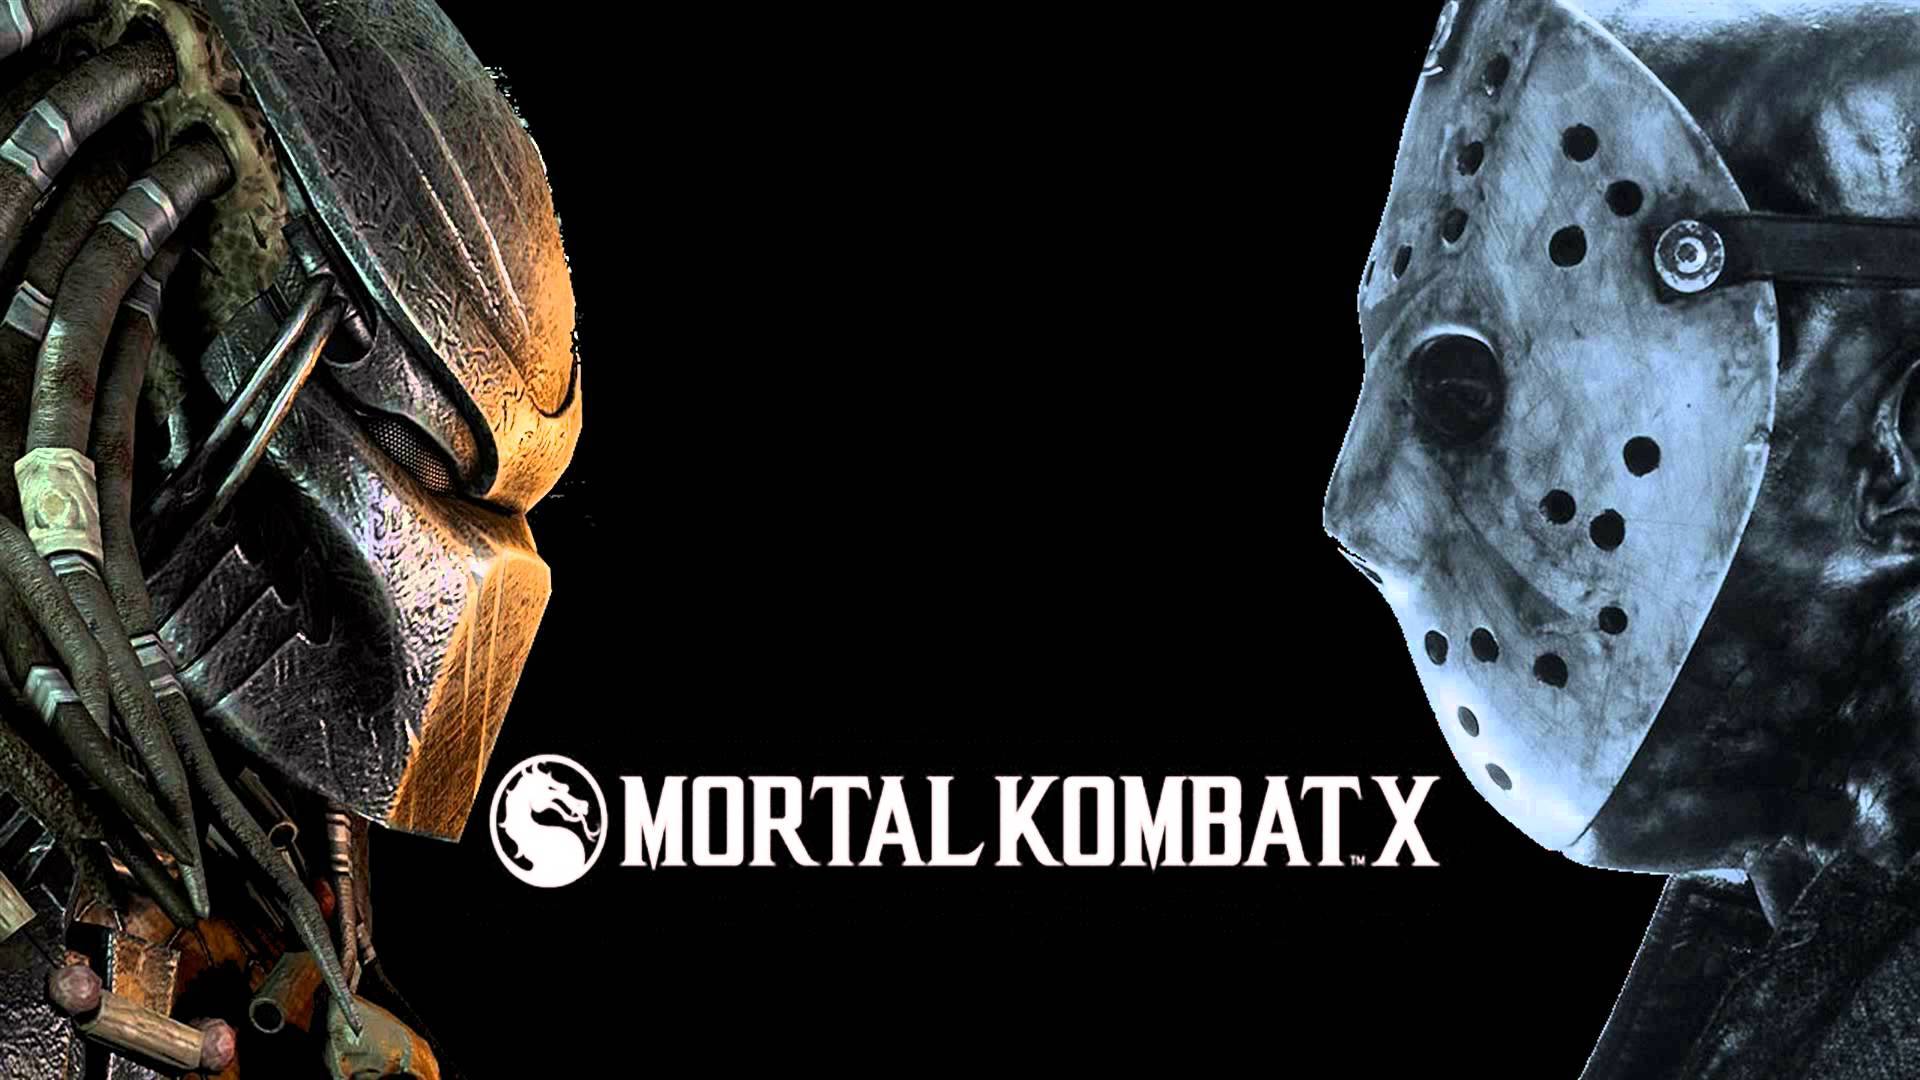 Mortal Kombat X sur PC (version boite) à 14.99 €